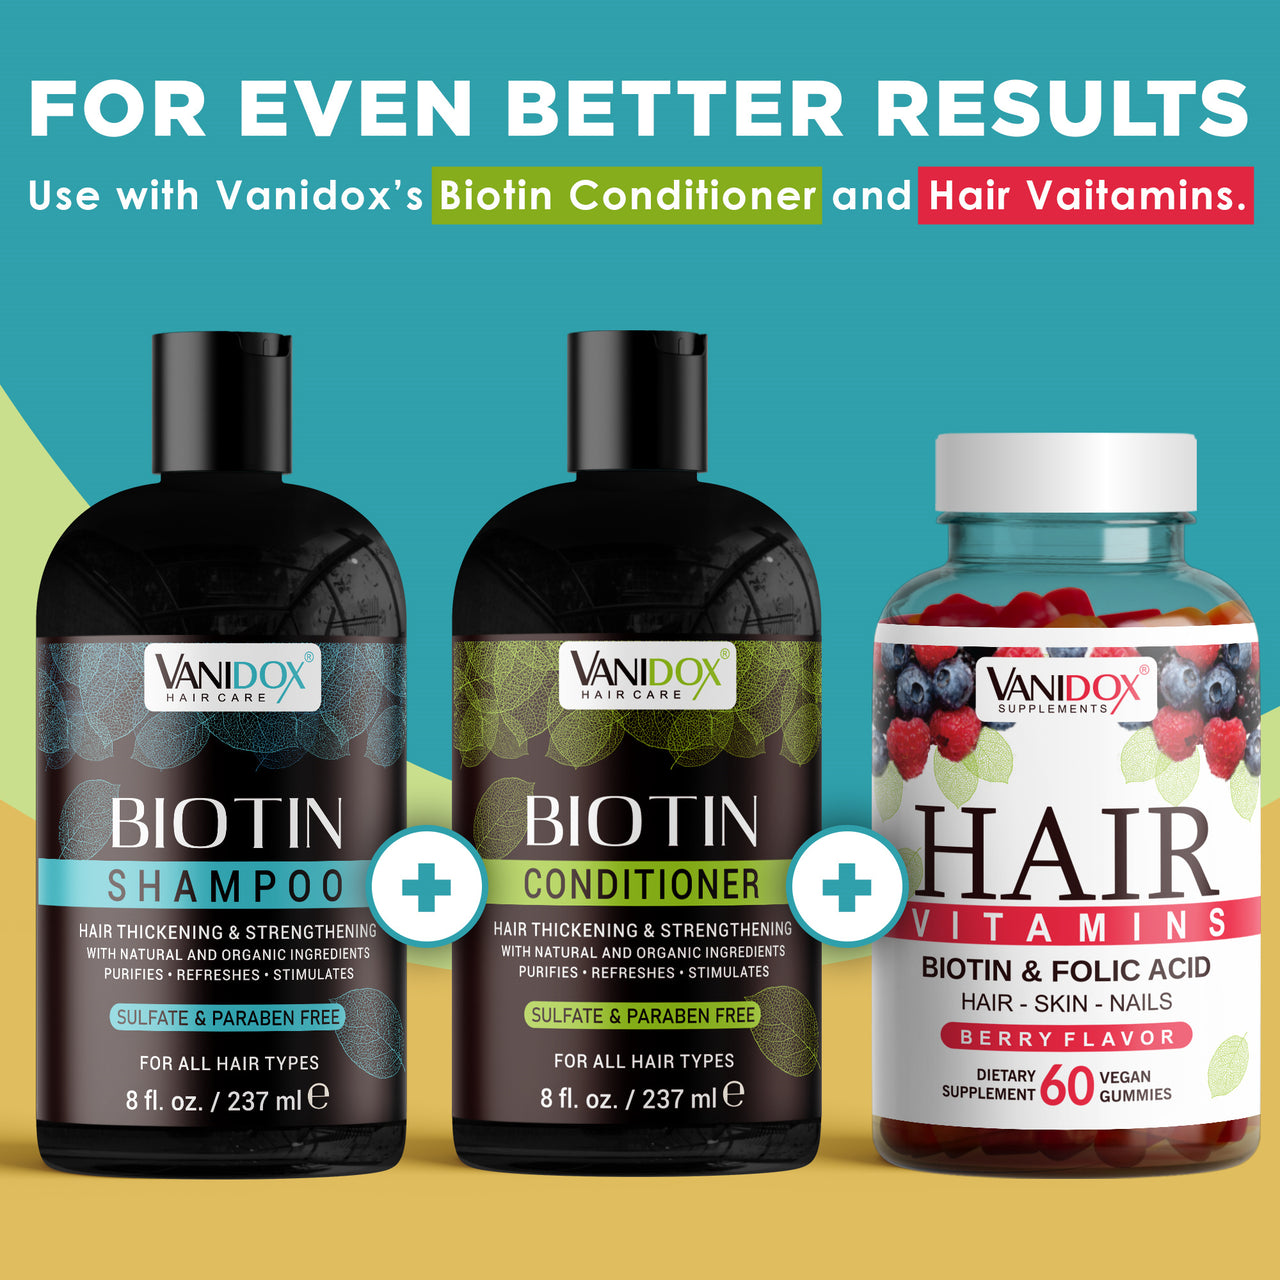 12 Best Supplements for Hair Growth - Top Hair Vitamins 2023